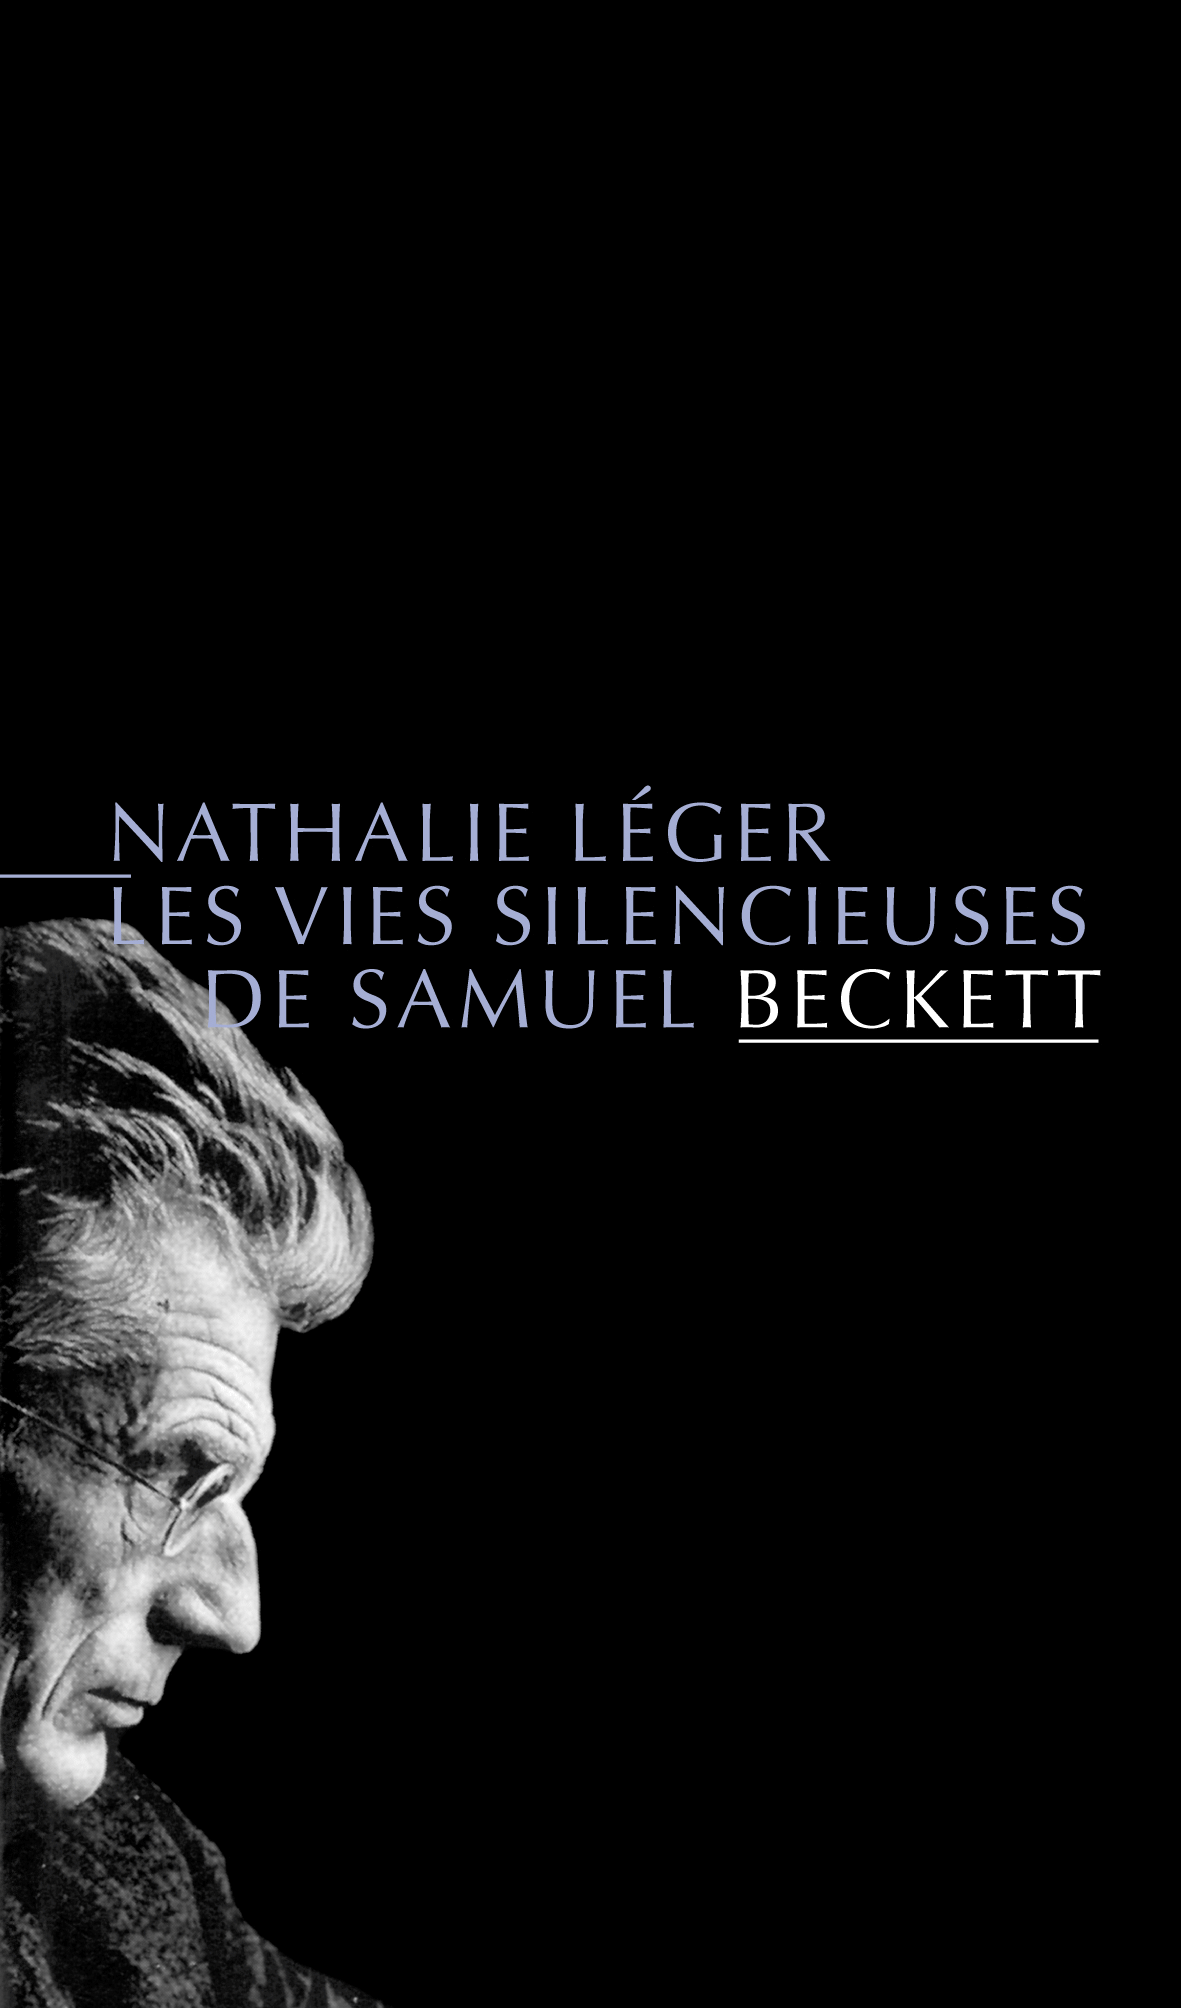 Les Vies silencieuses de Samuel Beckett